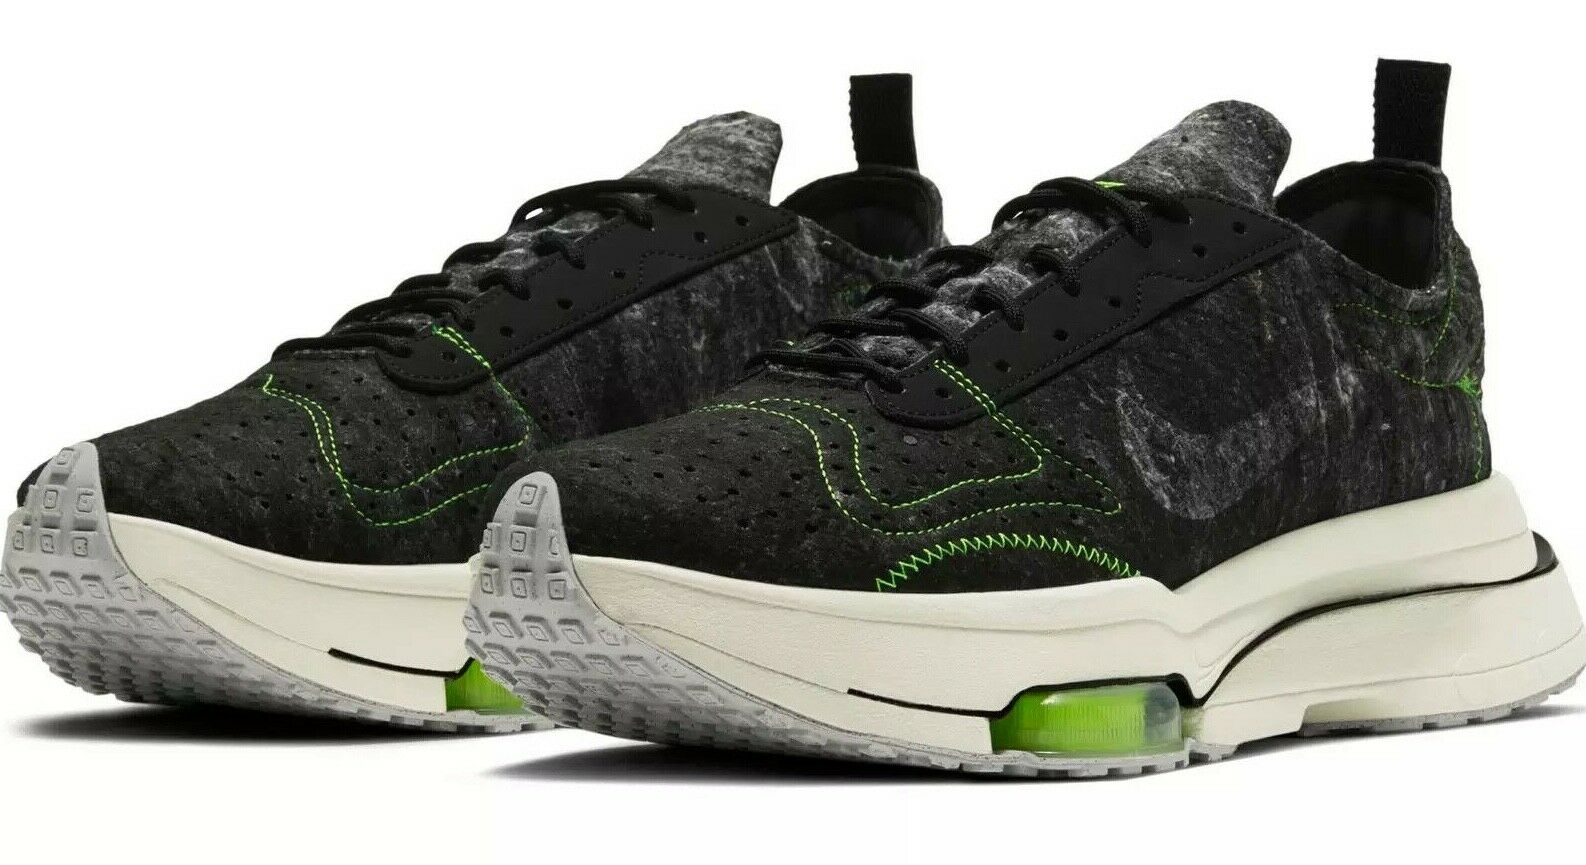 Nike (Air Zoom Type) Black Shoes Recycled (CW7157-001) Mens Size 11 NIB $160 ⭐️